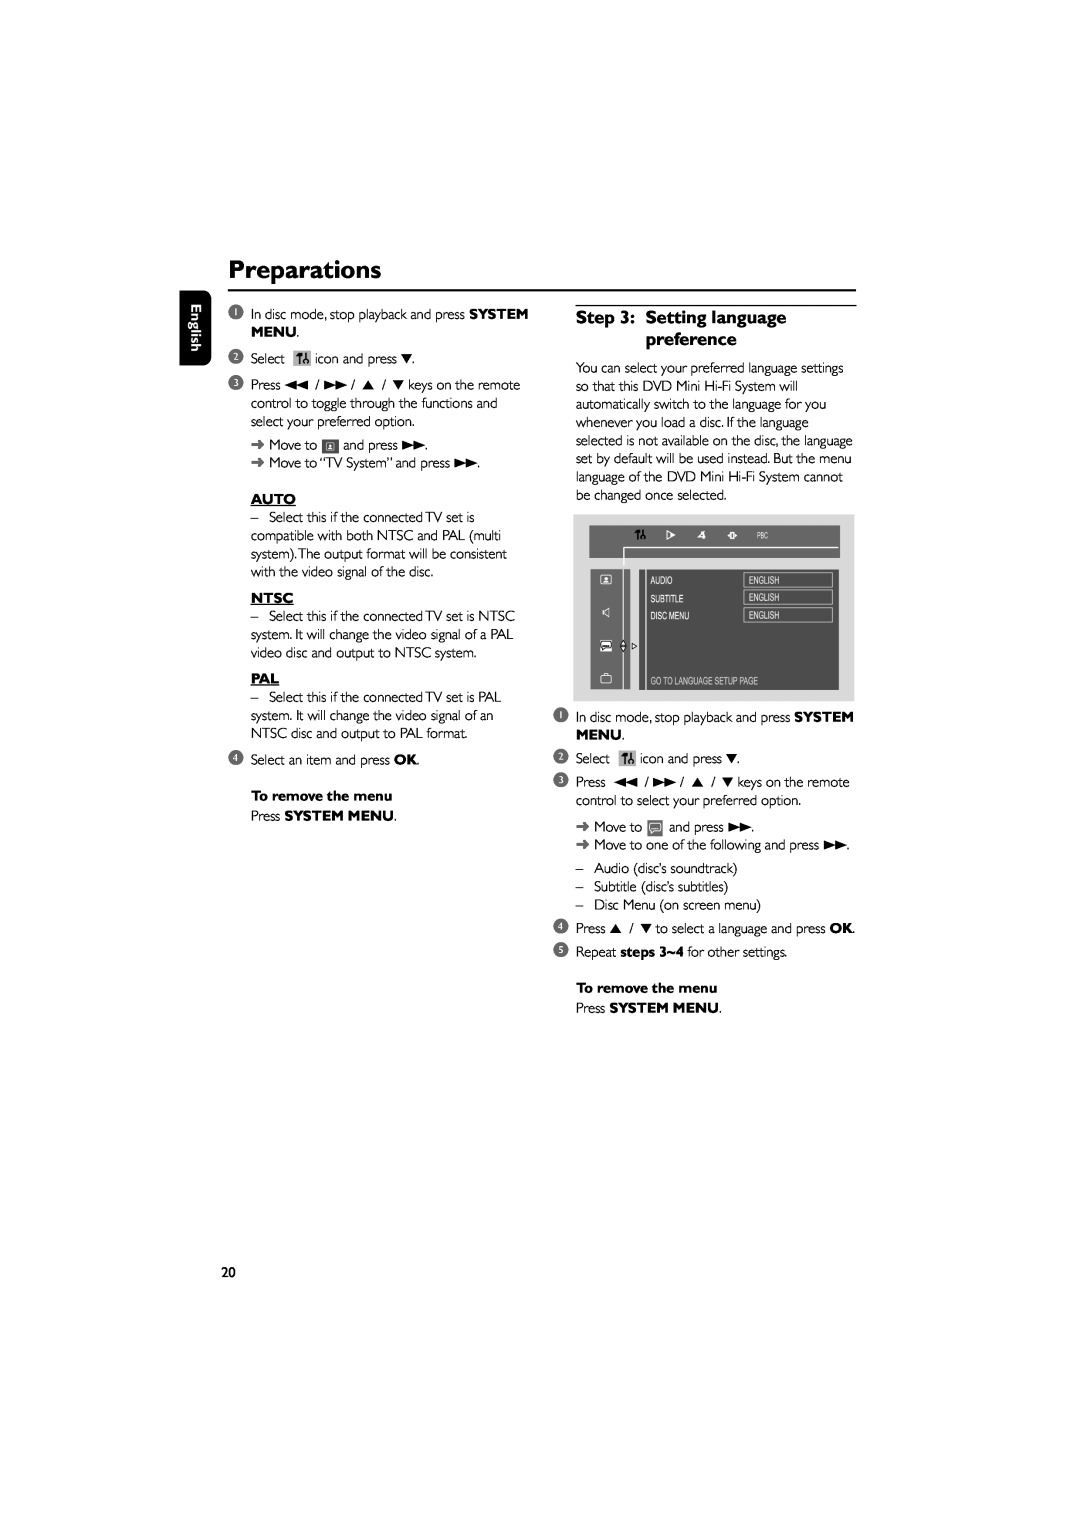 Philips FWD182 user manual Preparations, Setting language preference, English, Auto, Ntsc 